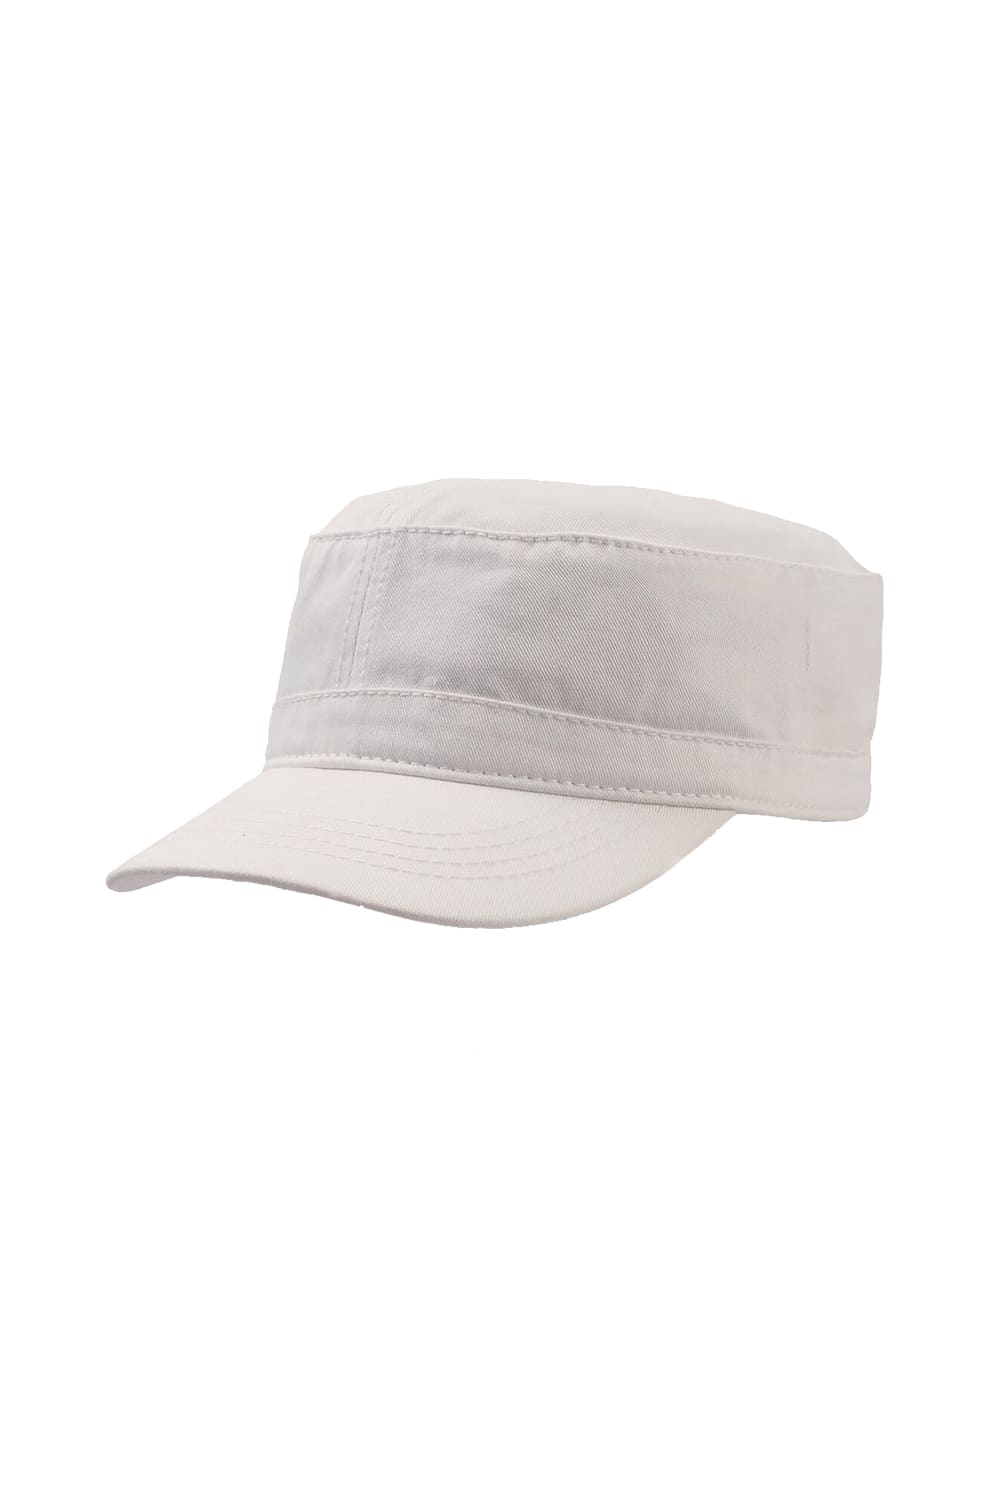 Atlantis Chino Cotton Uniform Military Cap (Pack of 2) (White)